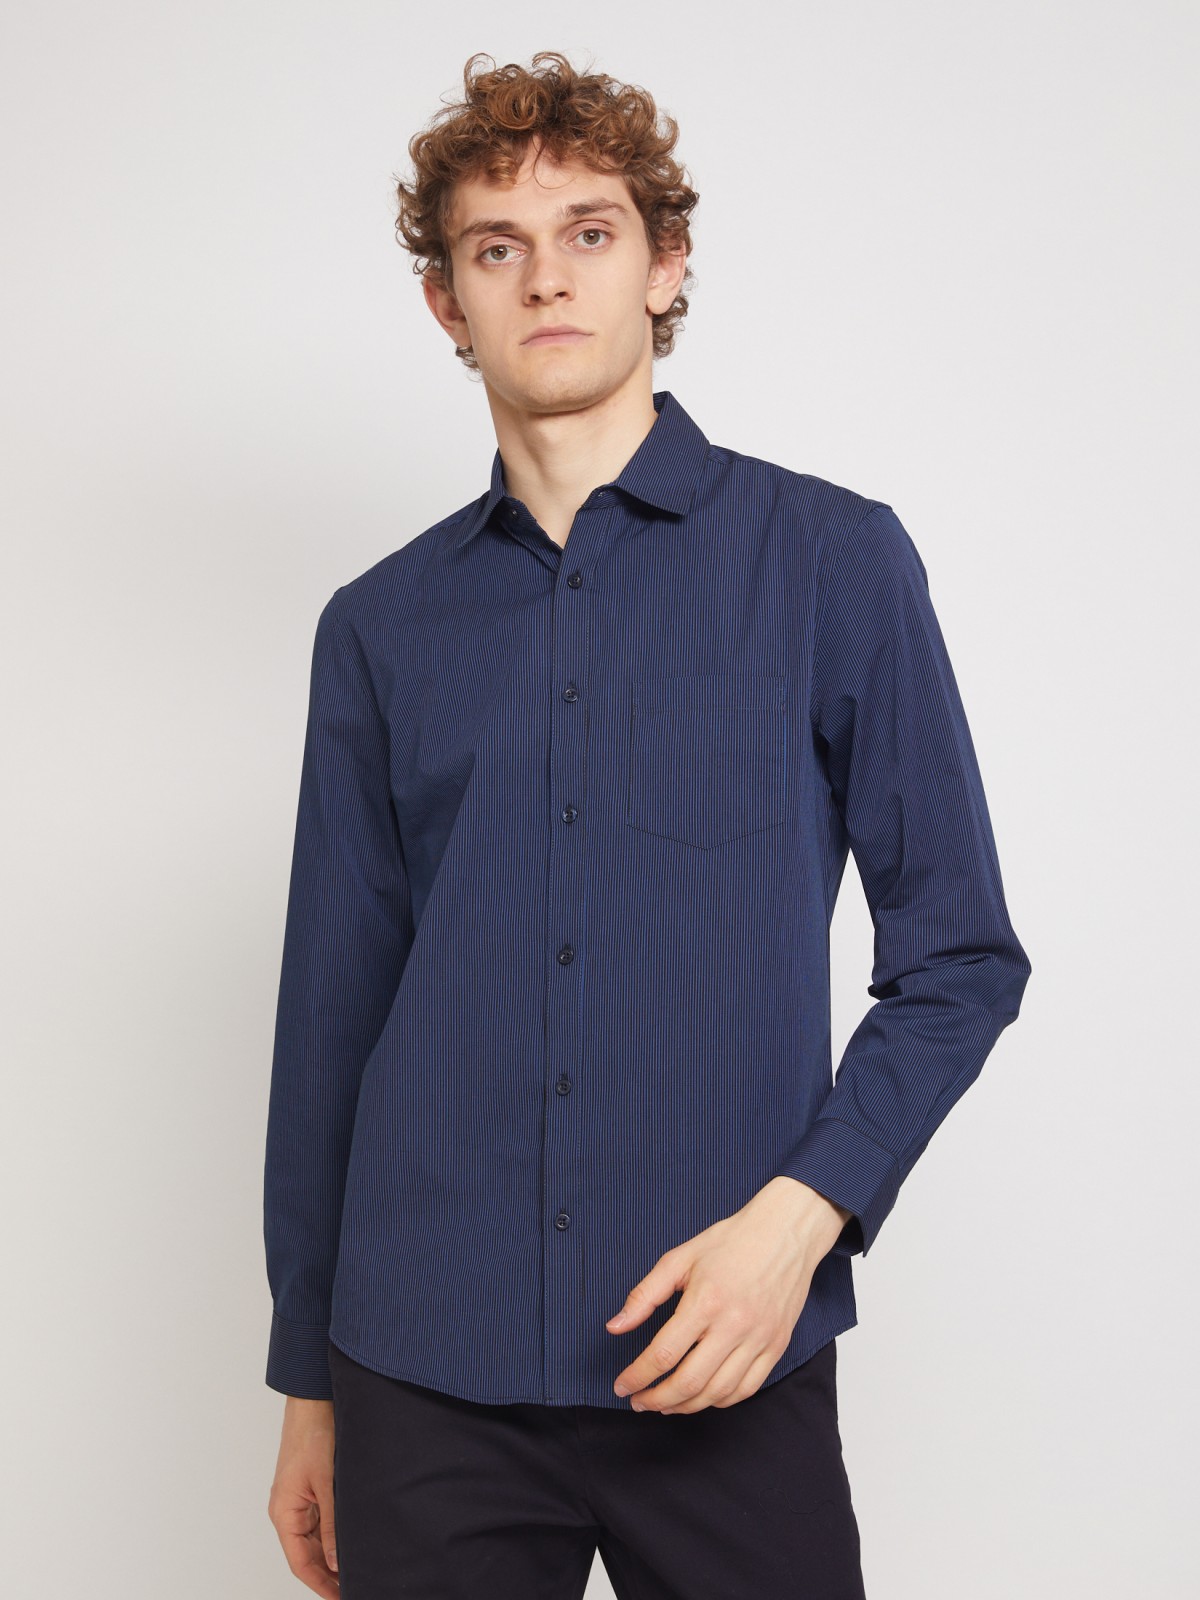 Рубашка с узором в тонкую полоску zolla 011332162012, цвет темно-синий, размер S - фото 3